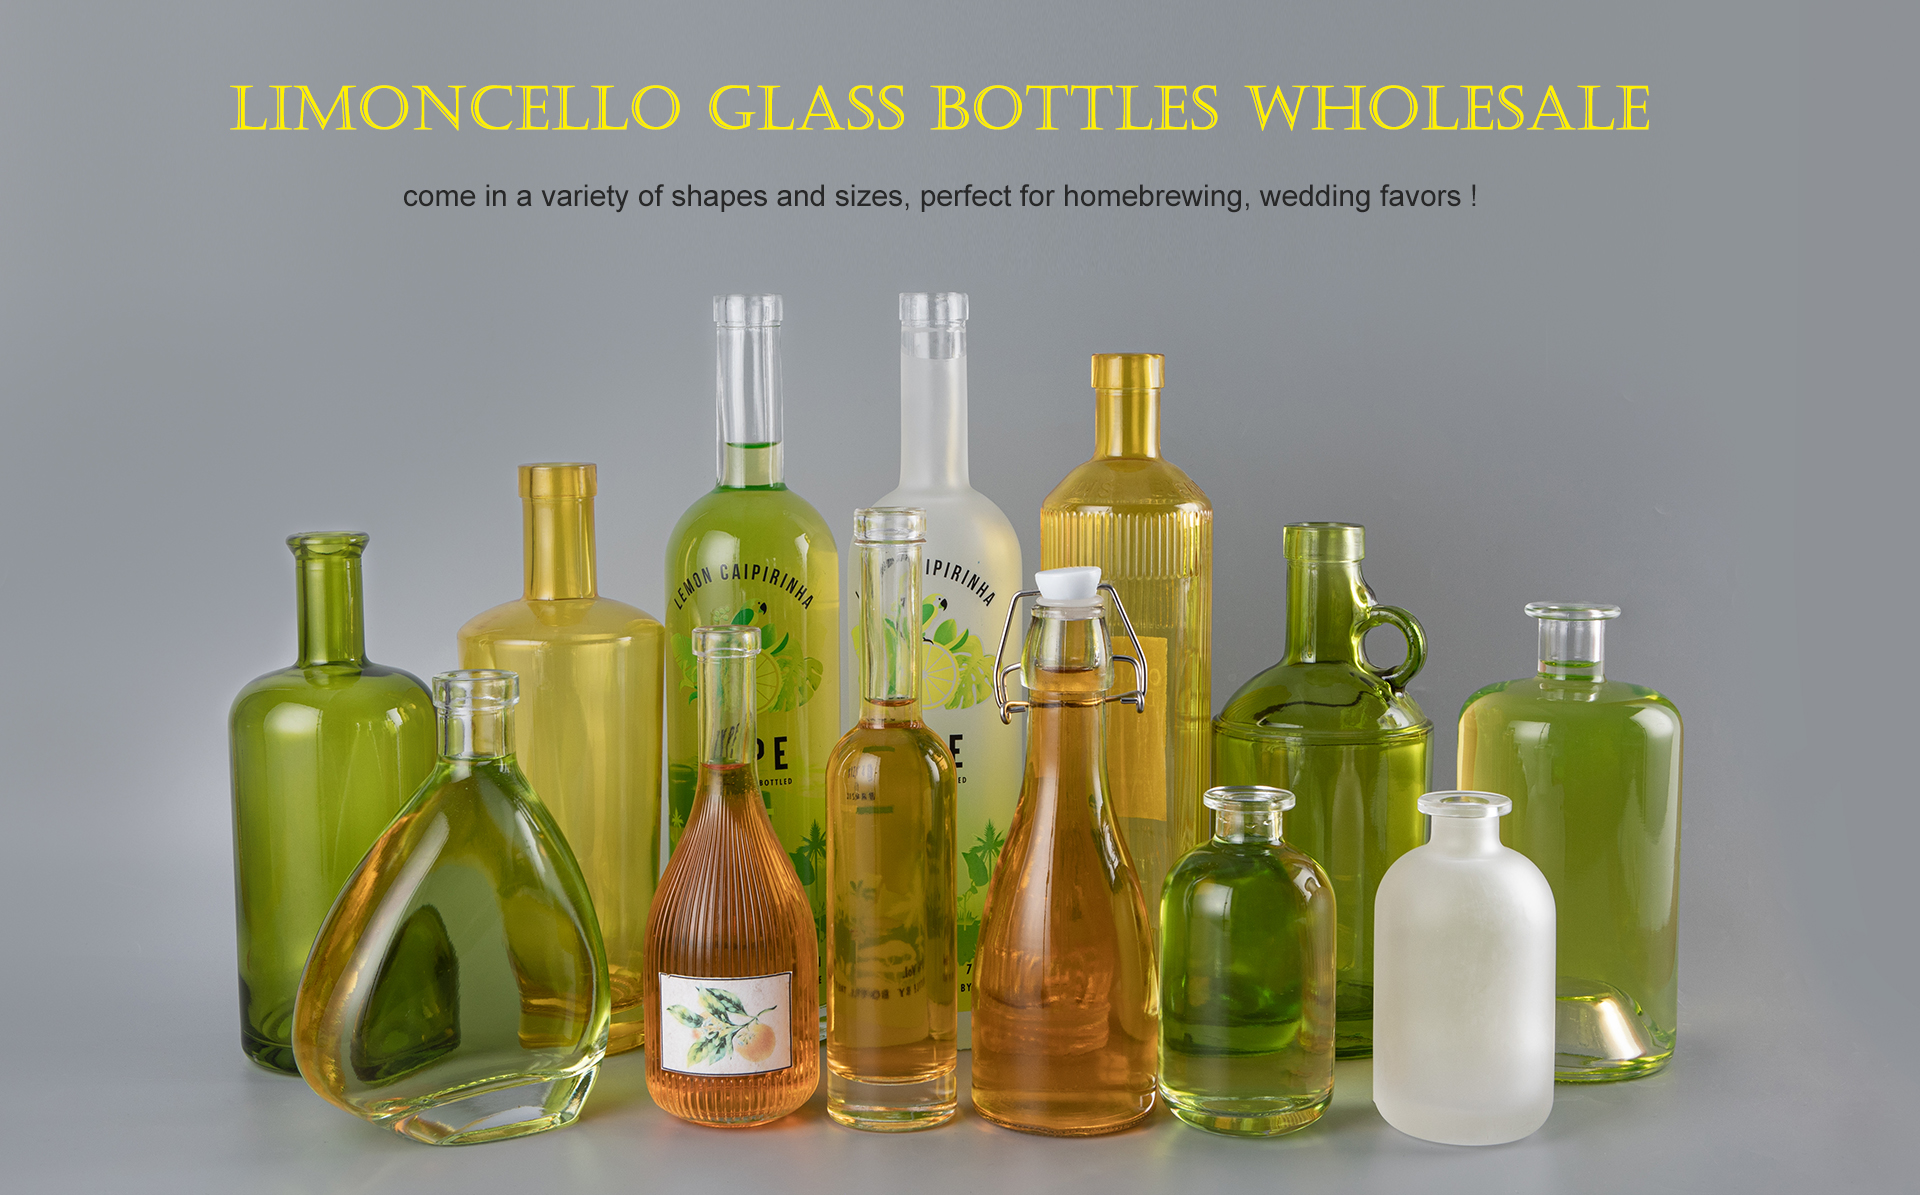 limoncello bottles wholesale